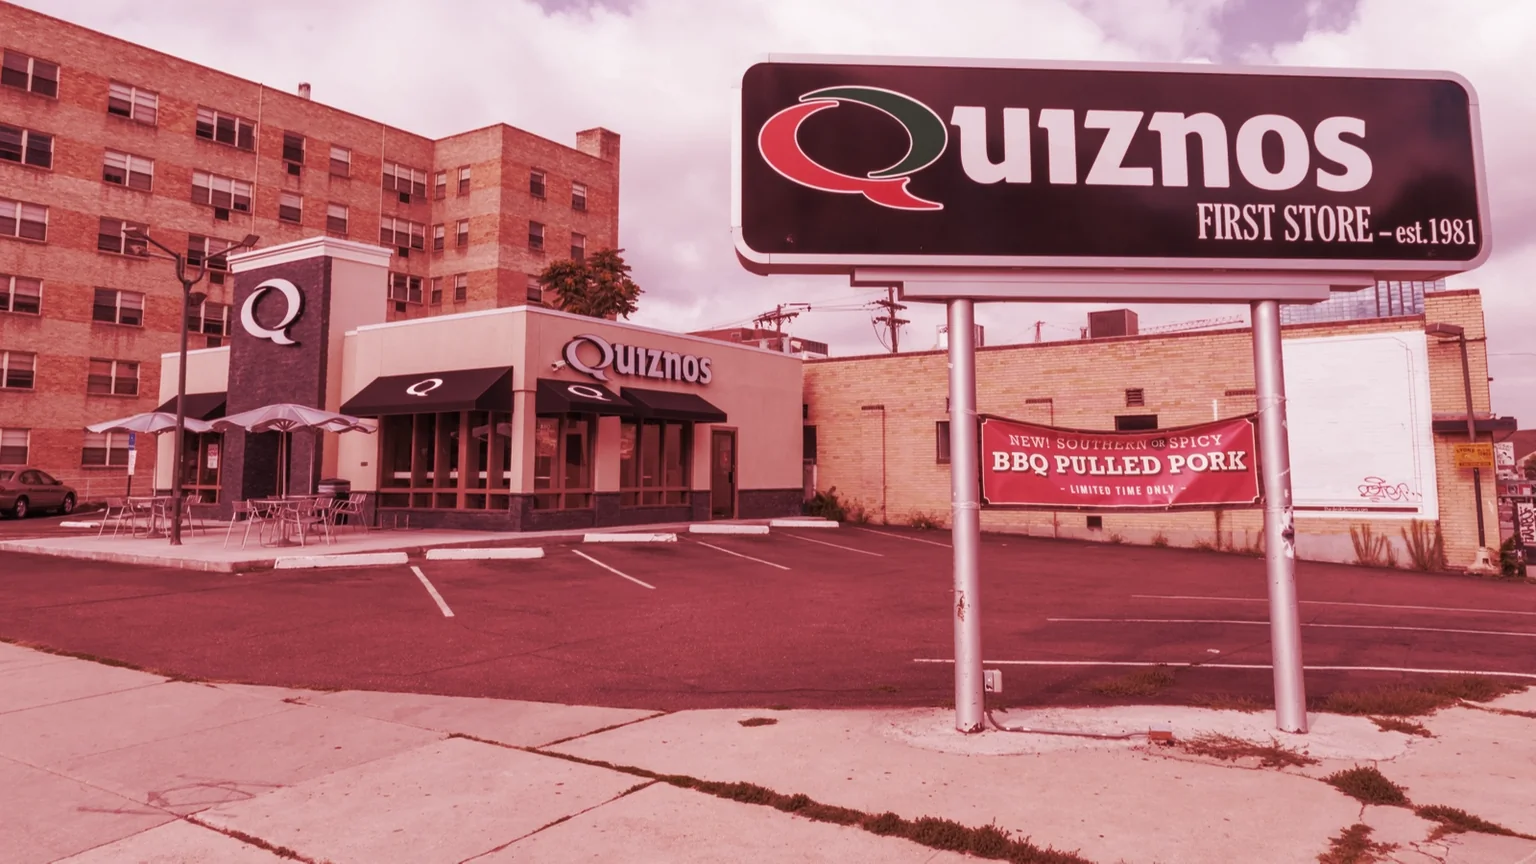 Quiznos in Denver. Image: Shutterstock